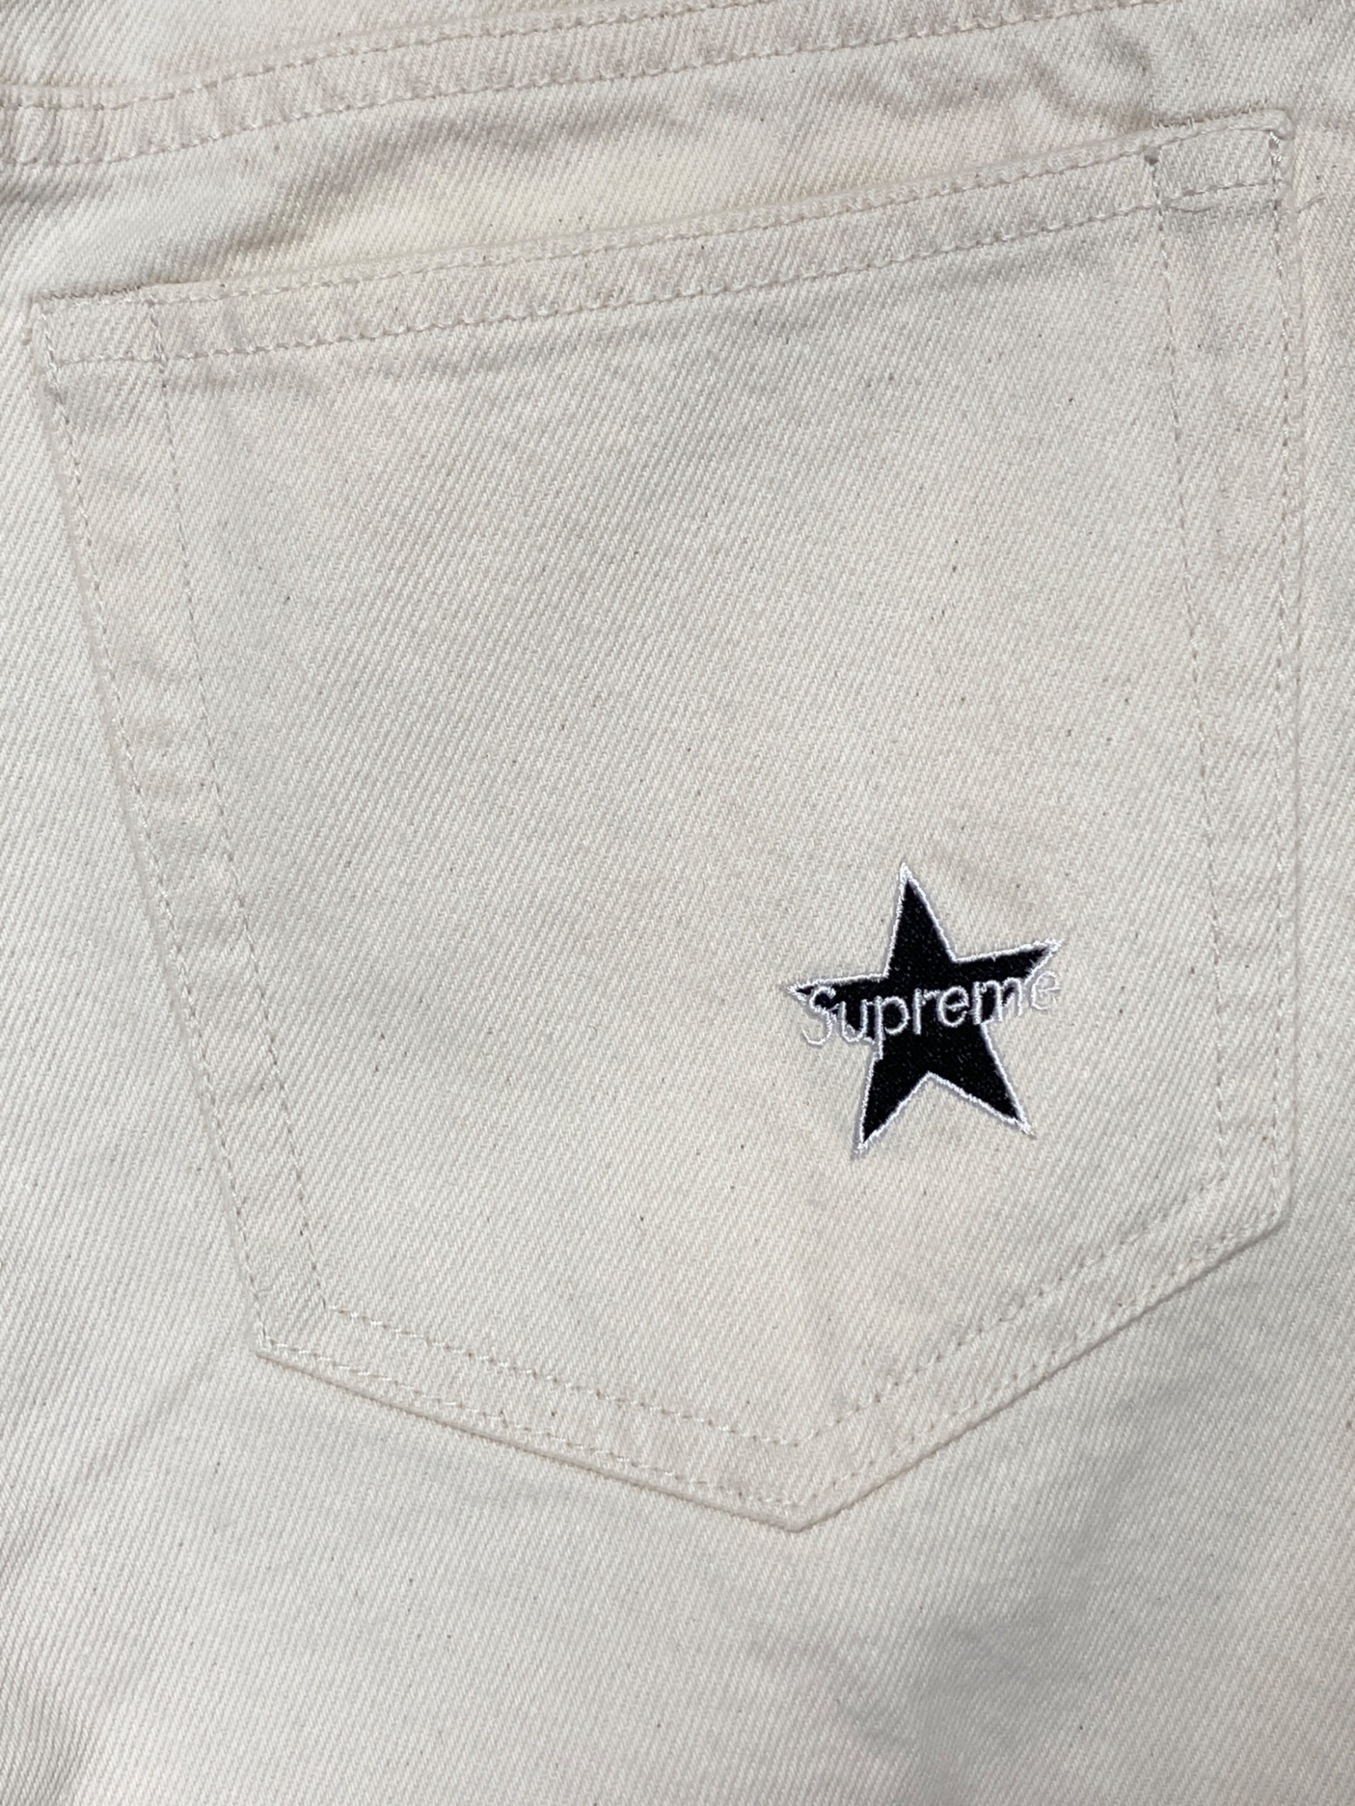 Supreme (シュプリーム) Washed Regular Star Jeans ベージュ サイズ:SIZE 30